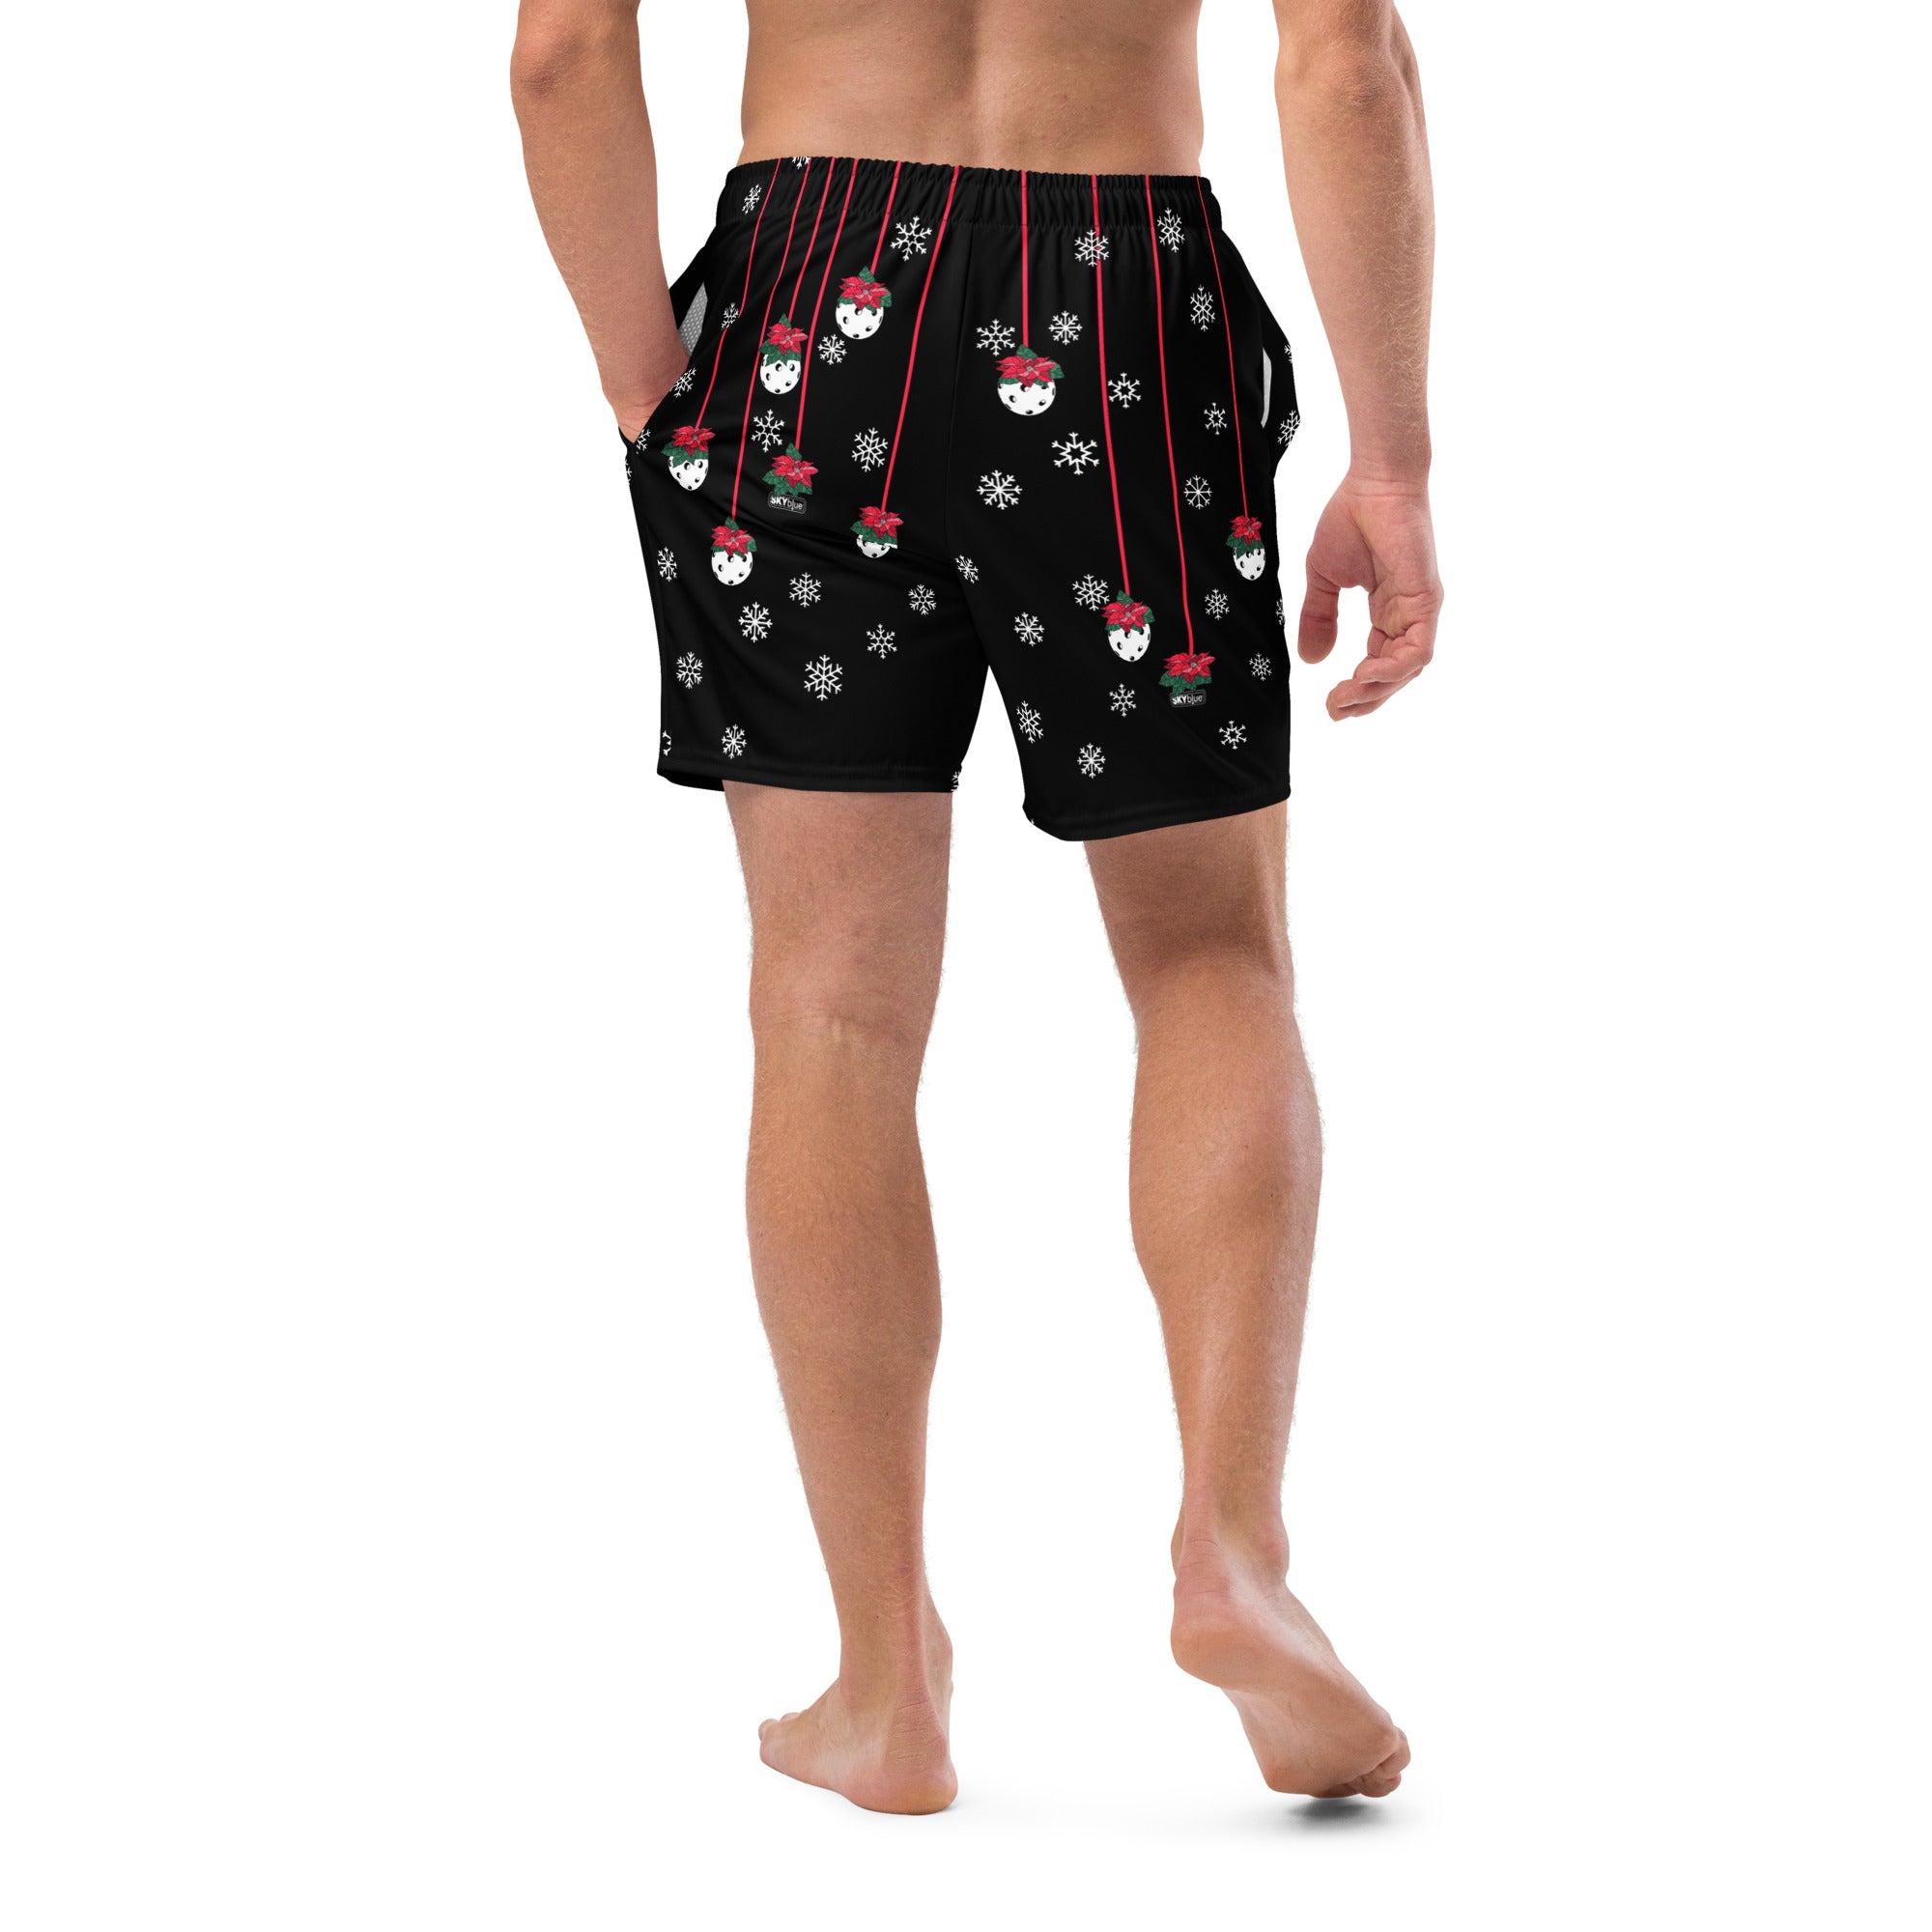 Poinsettia Pickleball© Men's Shorts with Liner